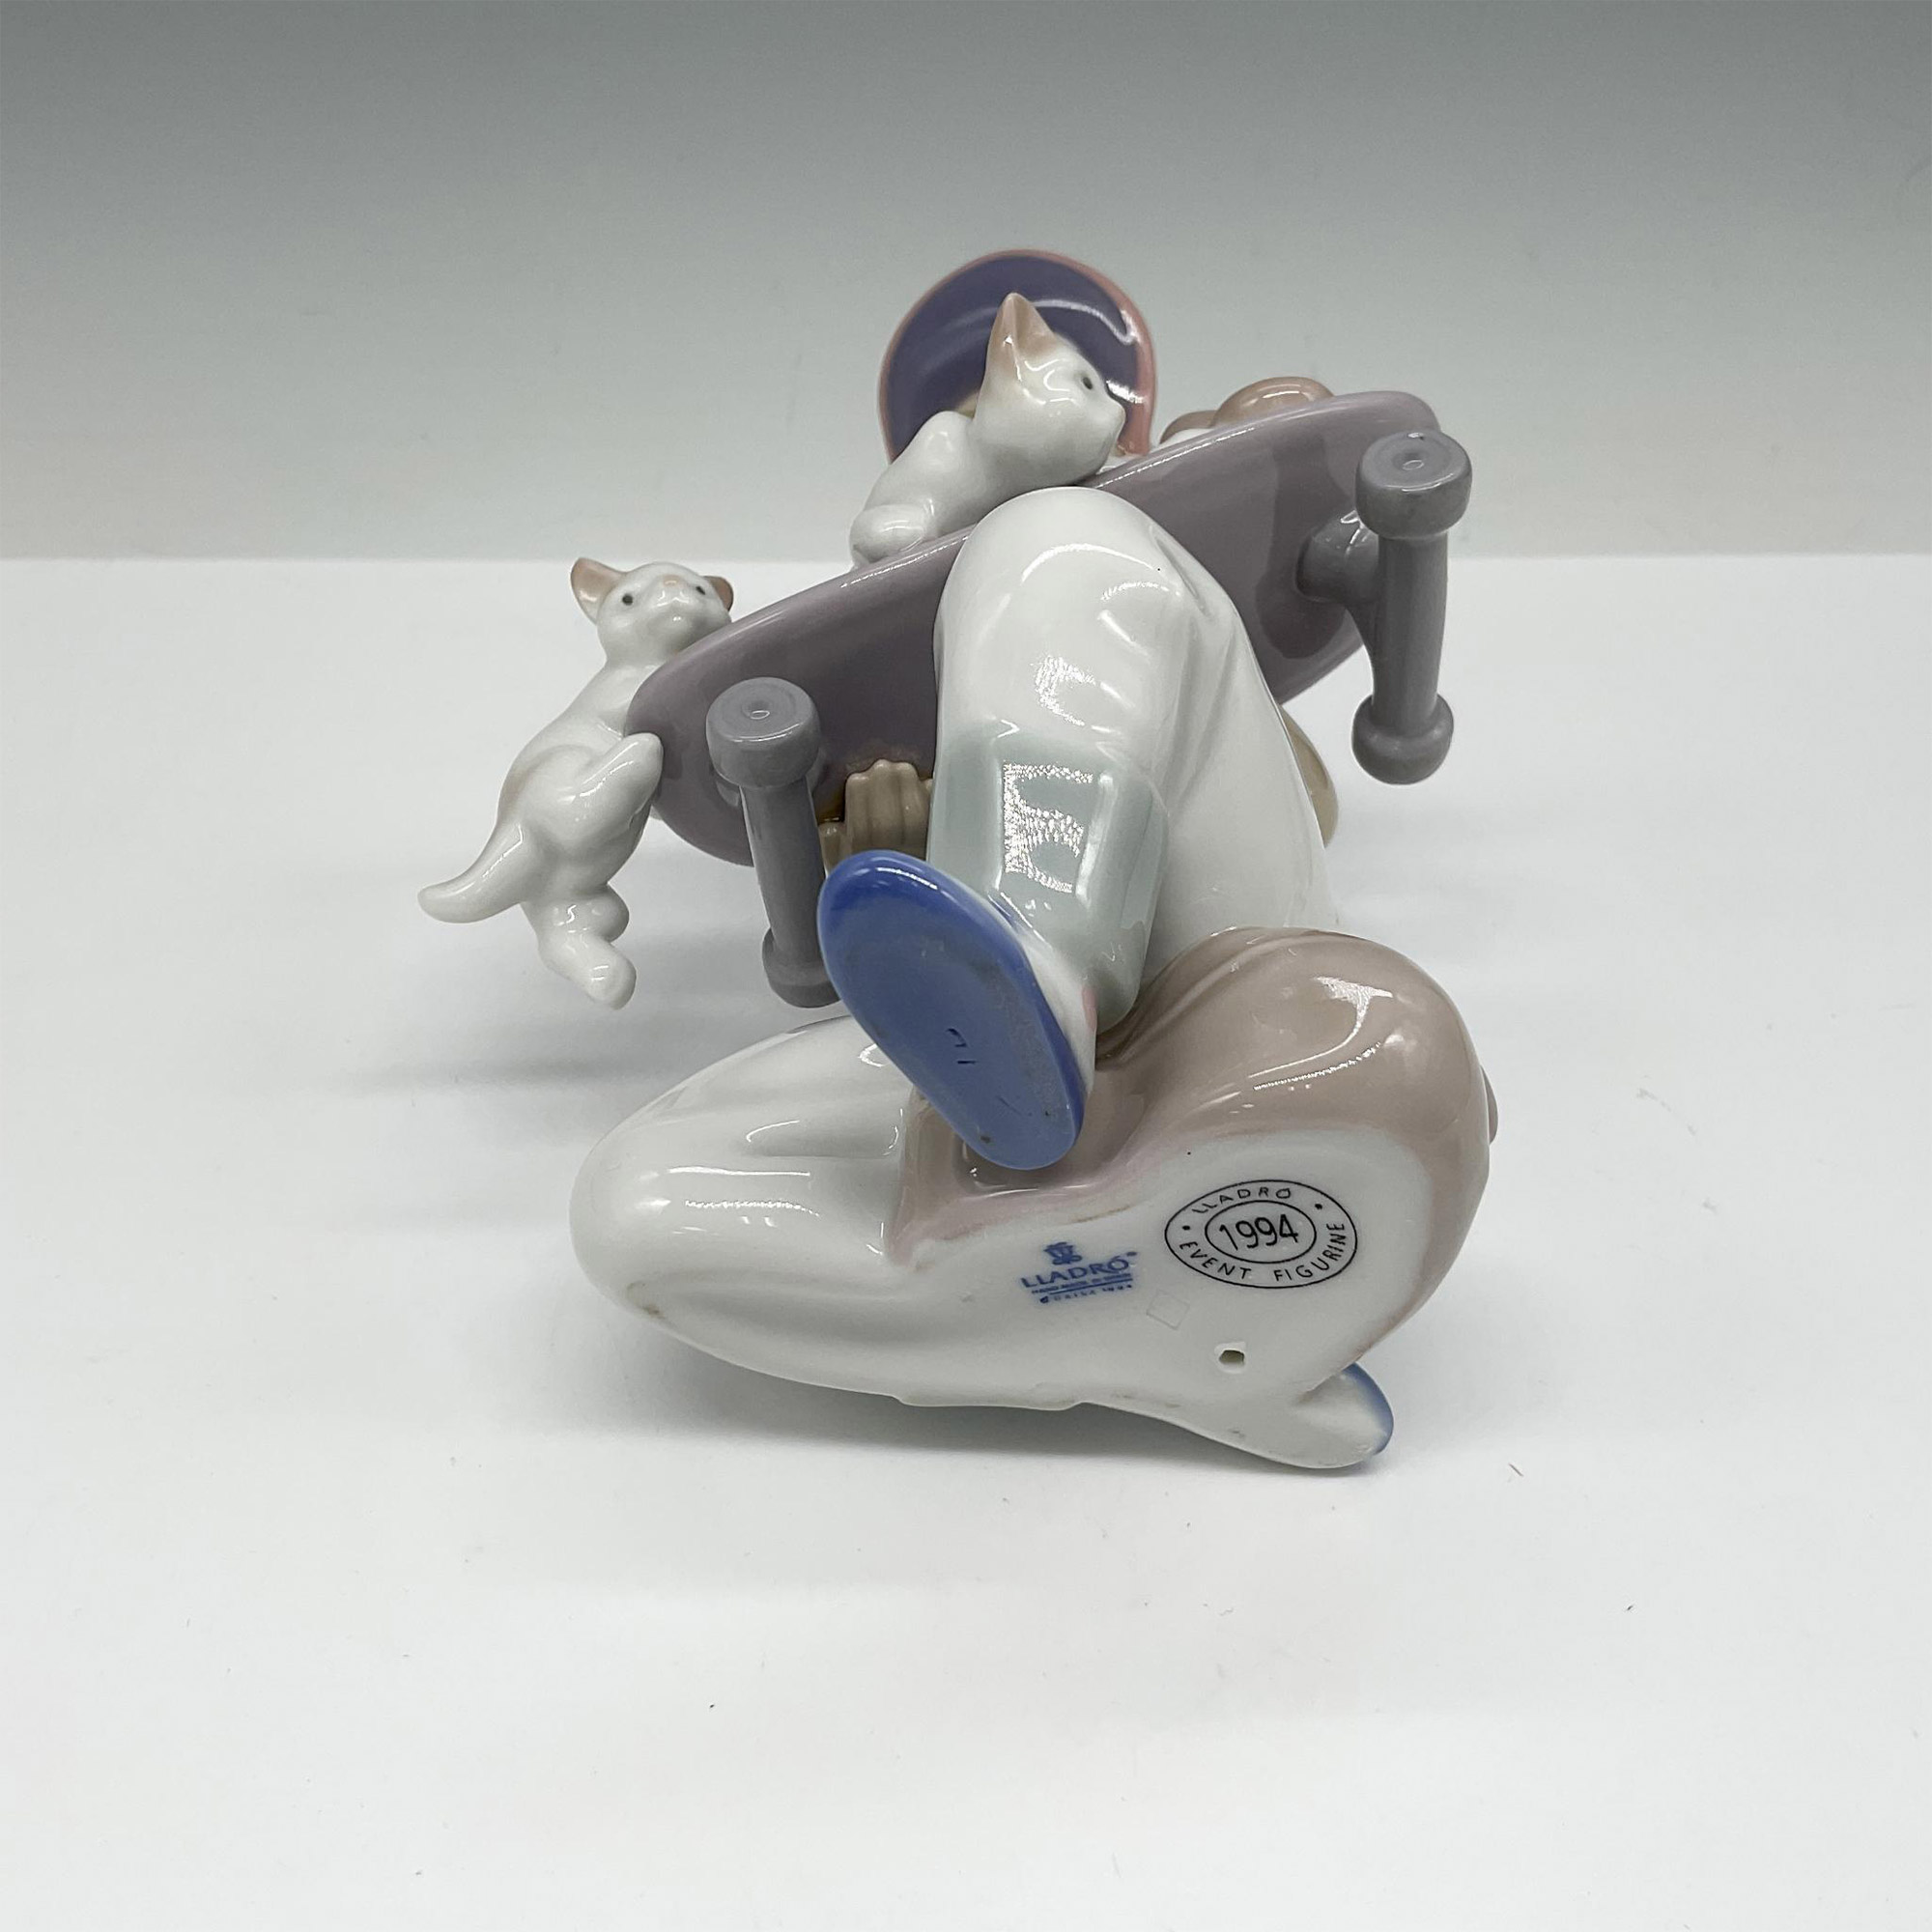 Little Riders 1007623 - Lladro Porcelain Figurine - Image 4 of 4